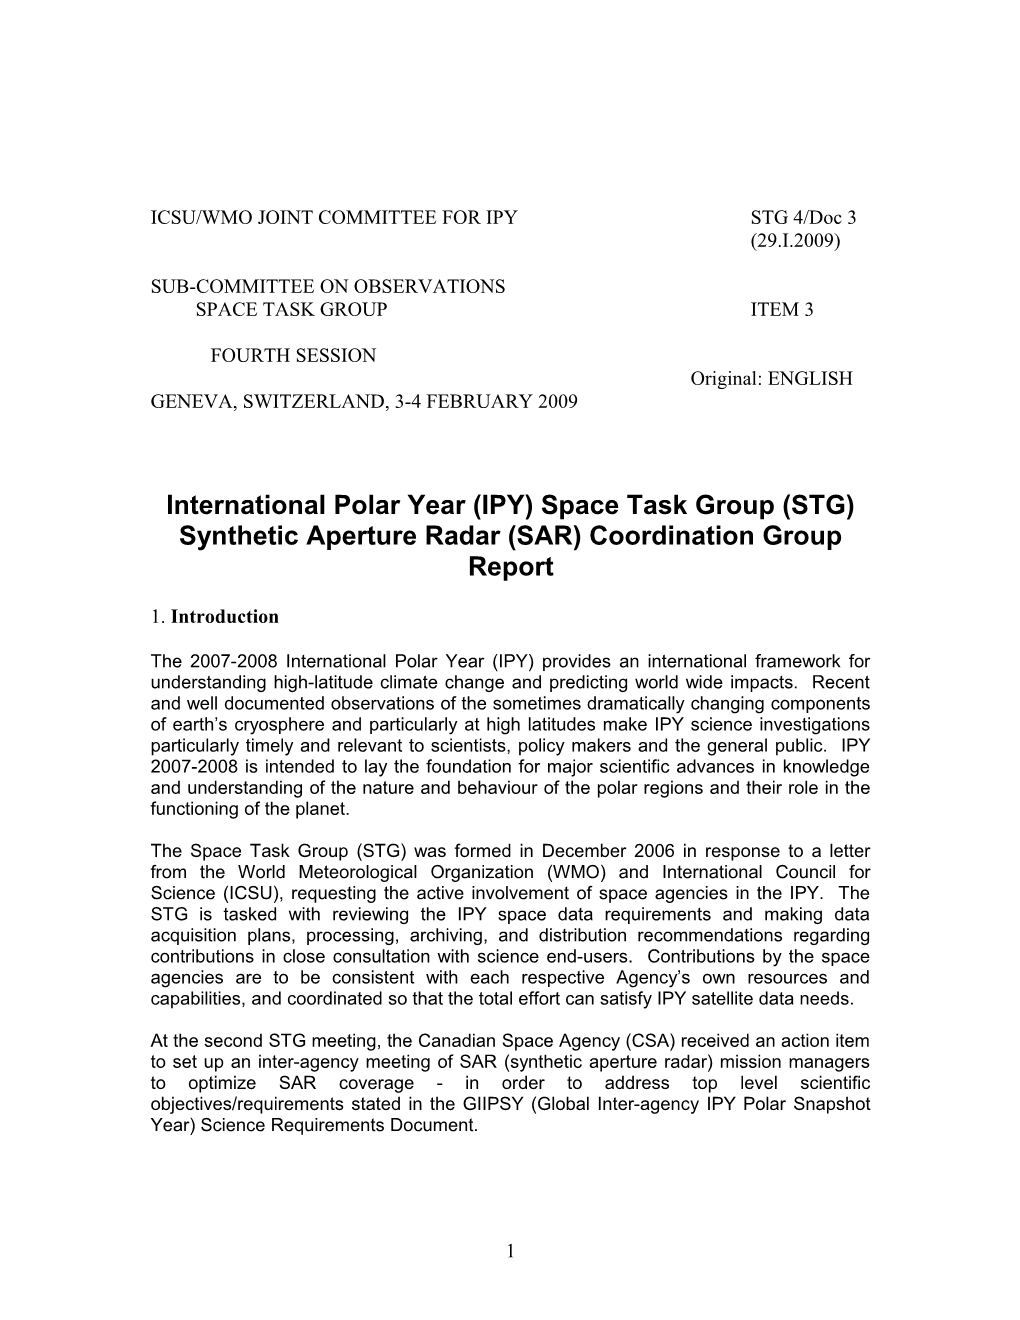 International Polar Year (IPY) Space Task Group (STG) Synthetic Aperture Radar (SAR)